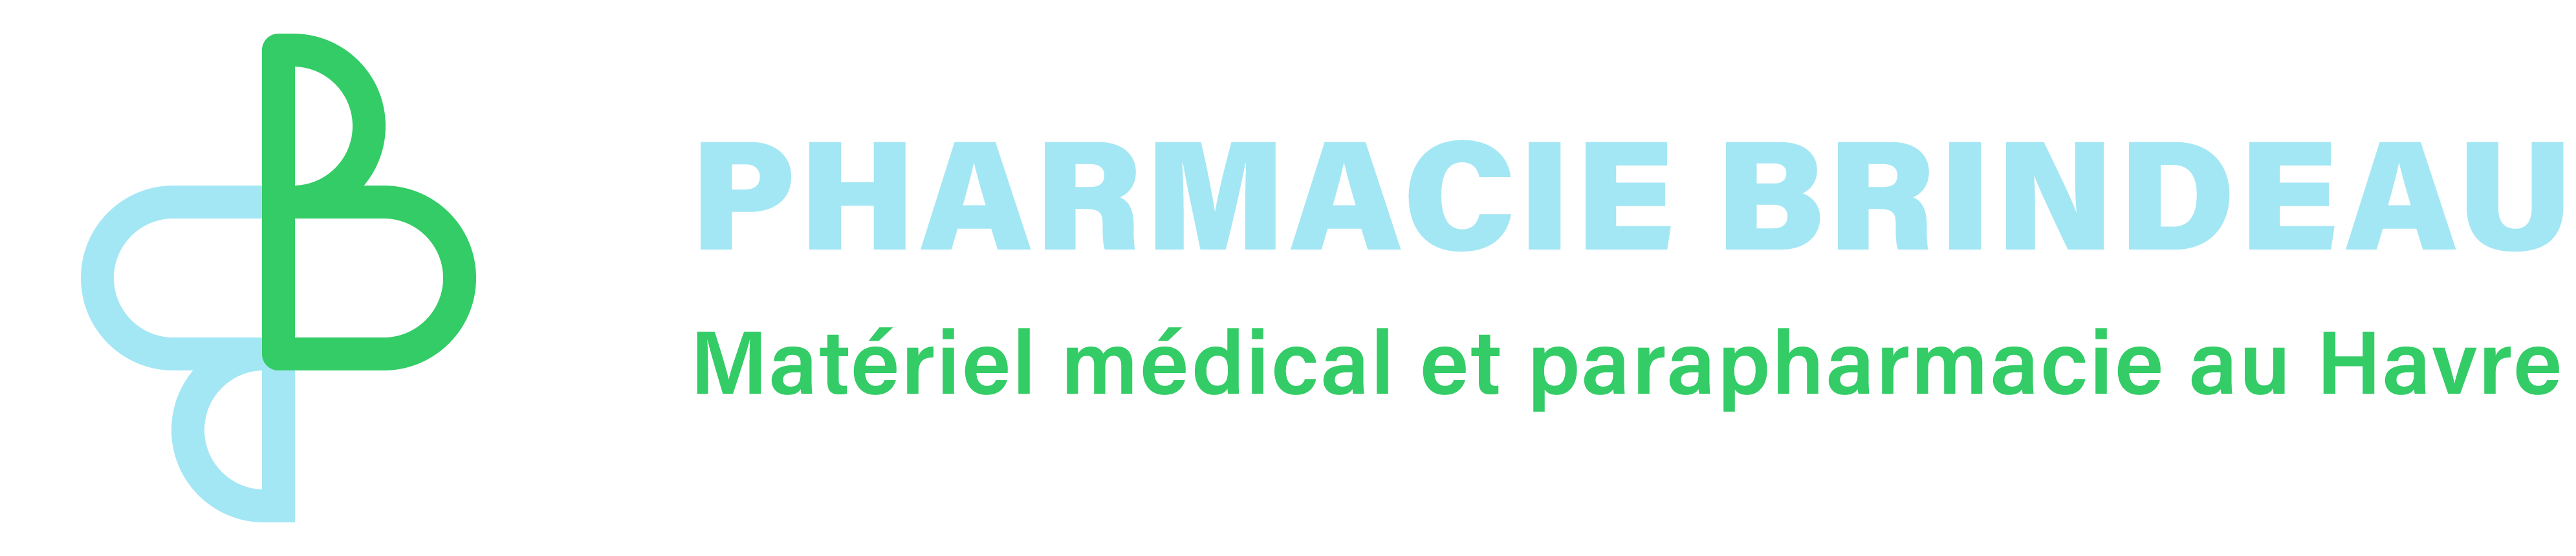 Pharmacie Brindeau